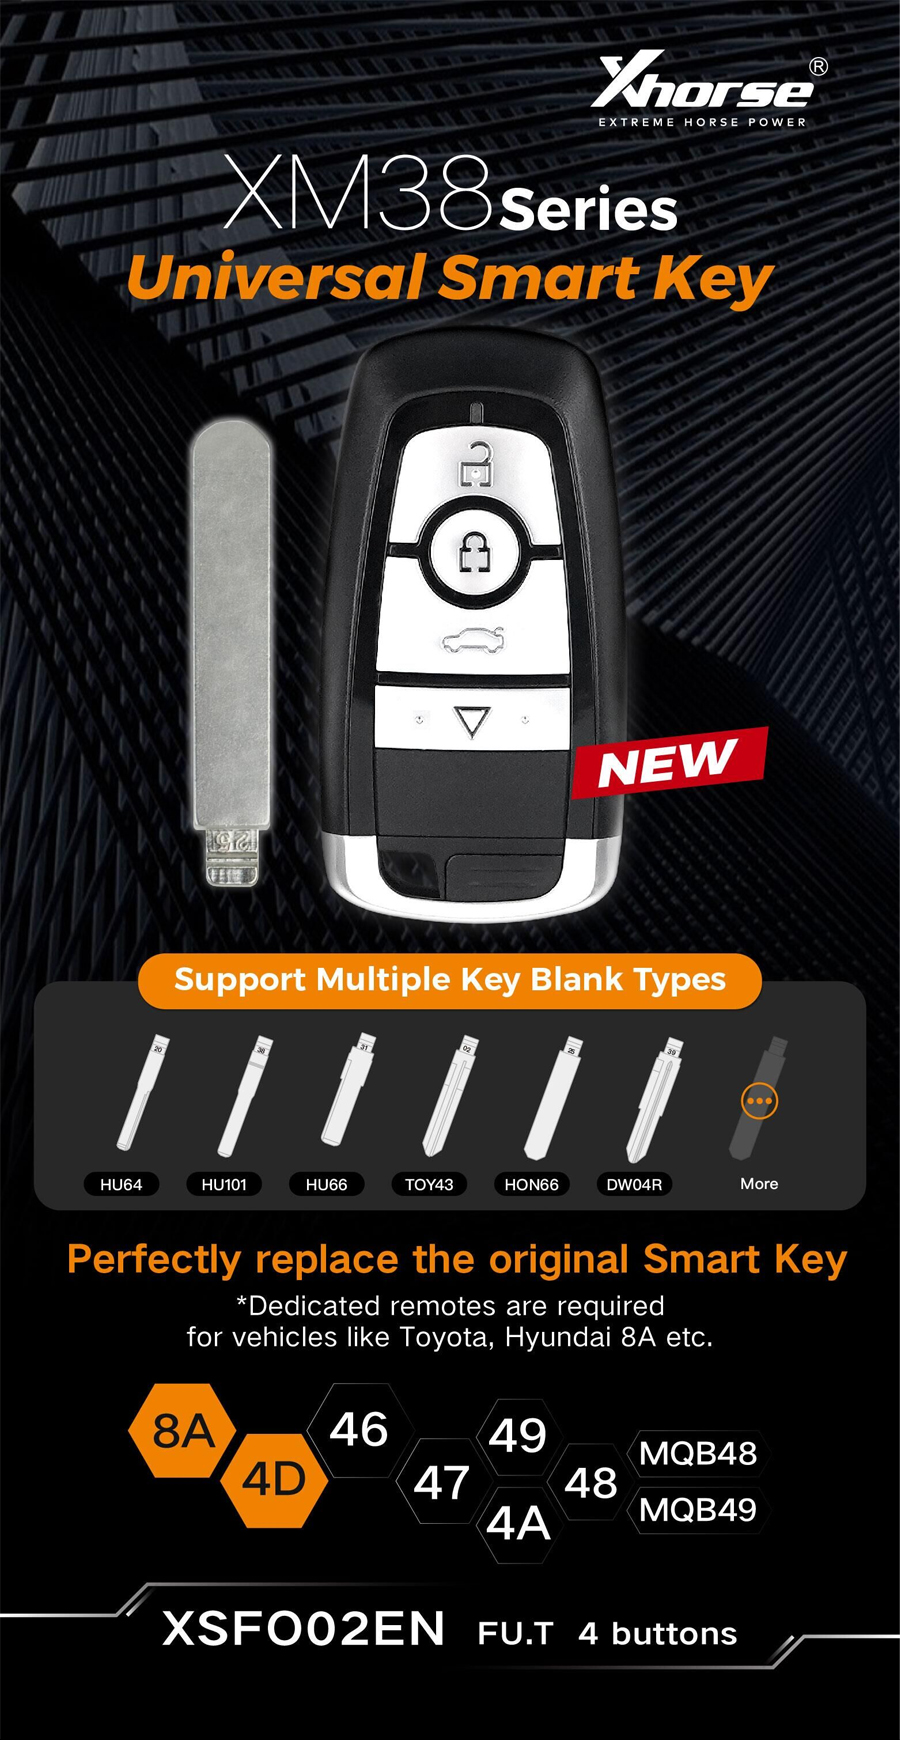 Xhorse XM38 Series Universal Smart Key